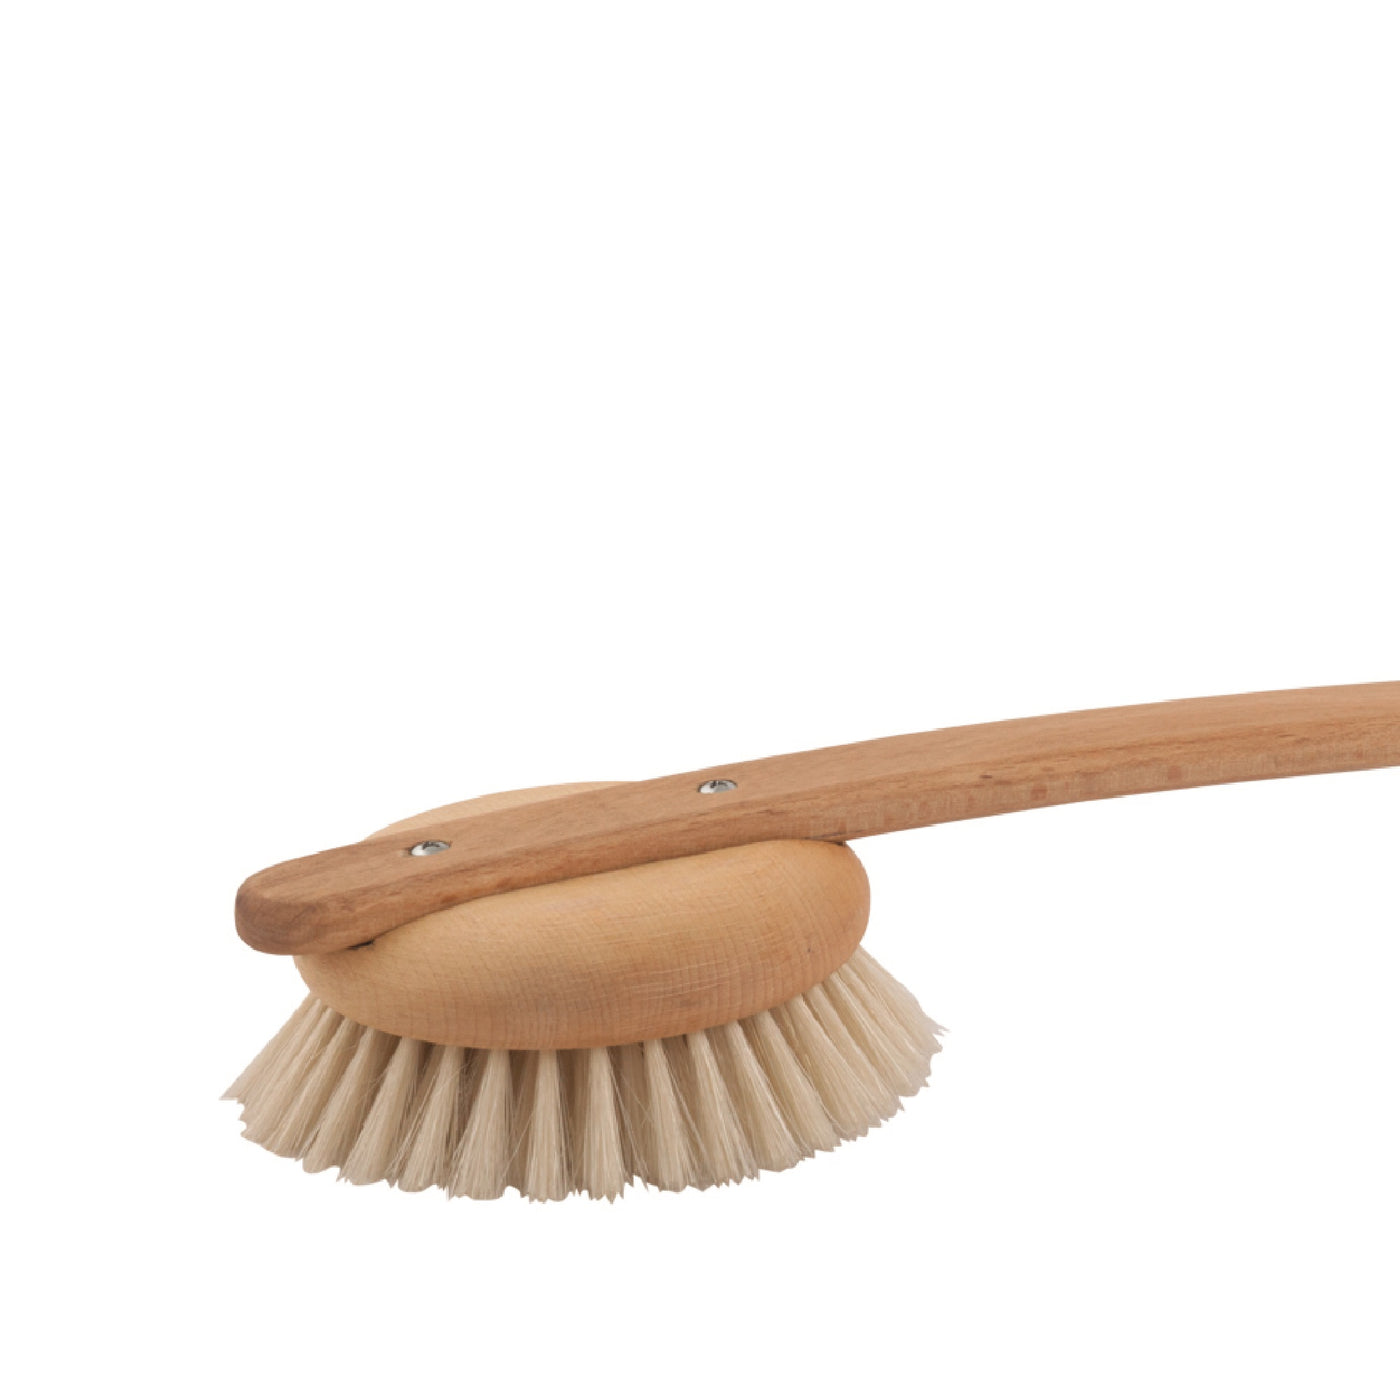 Redecker Round Head Bath Brush - Long Fixed Handle